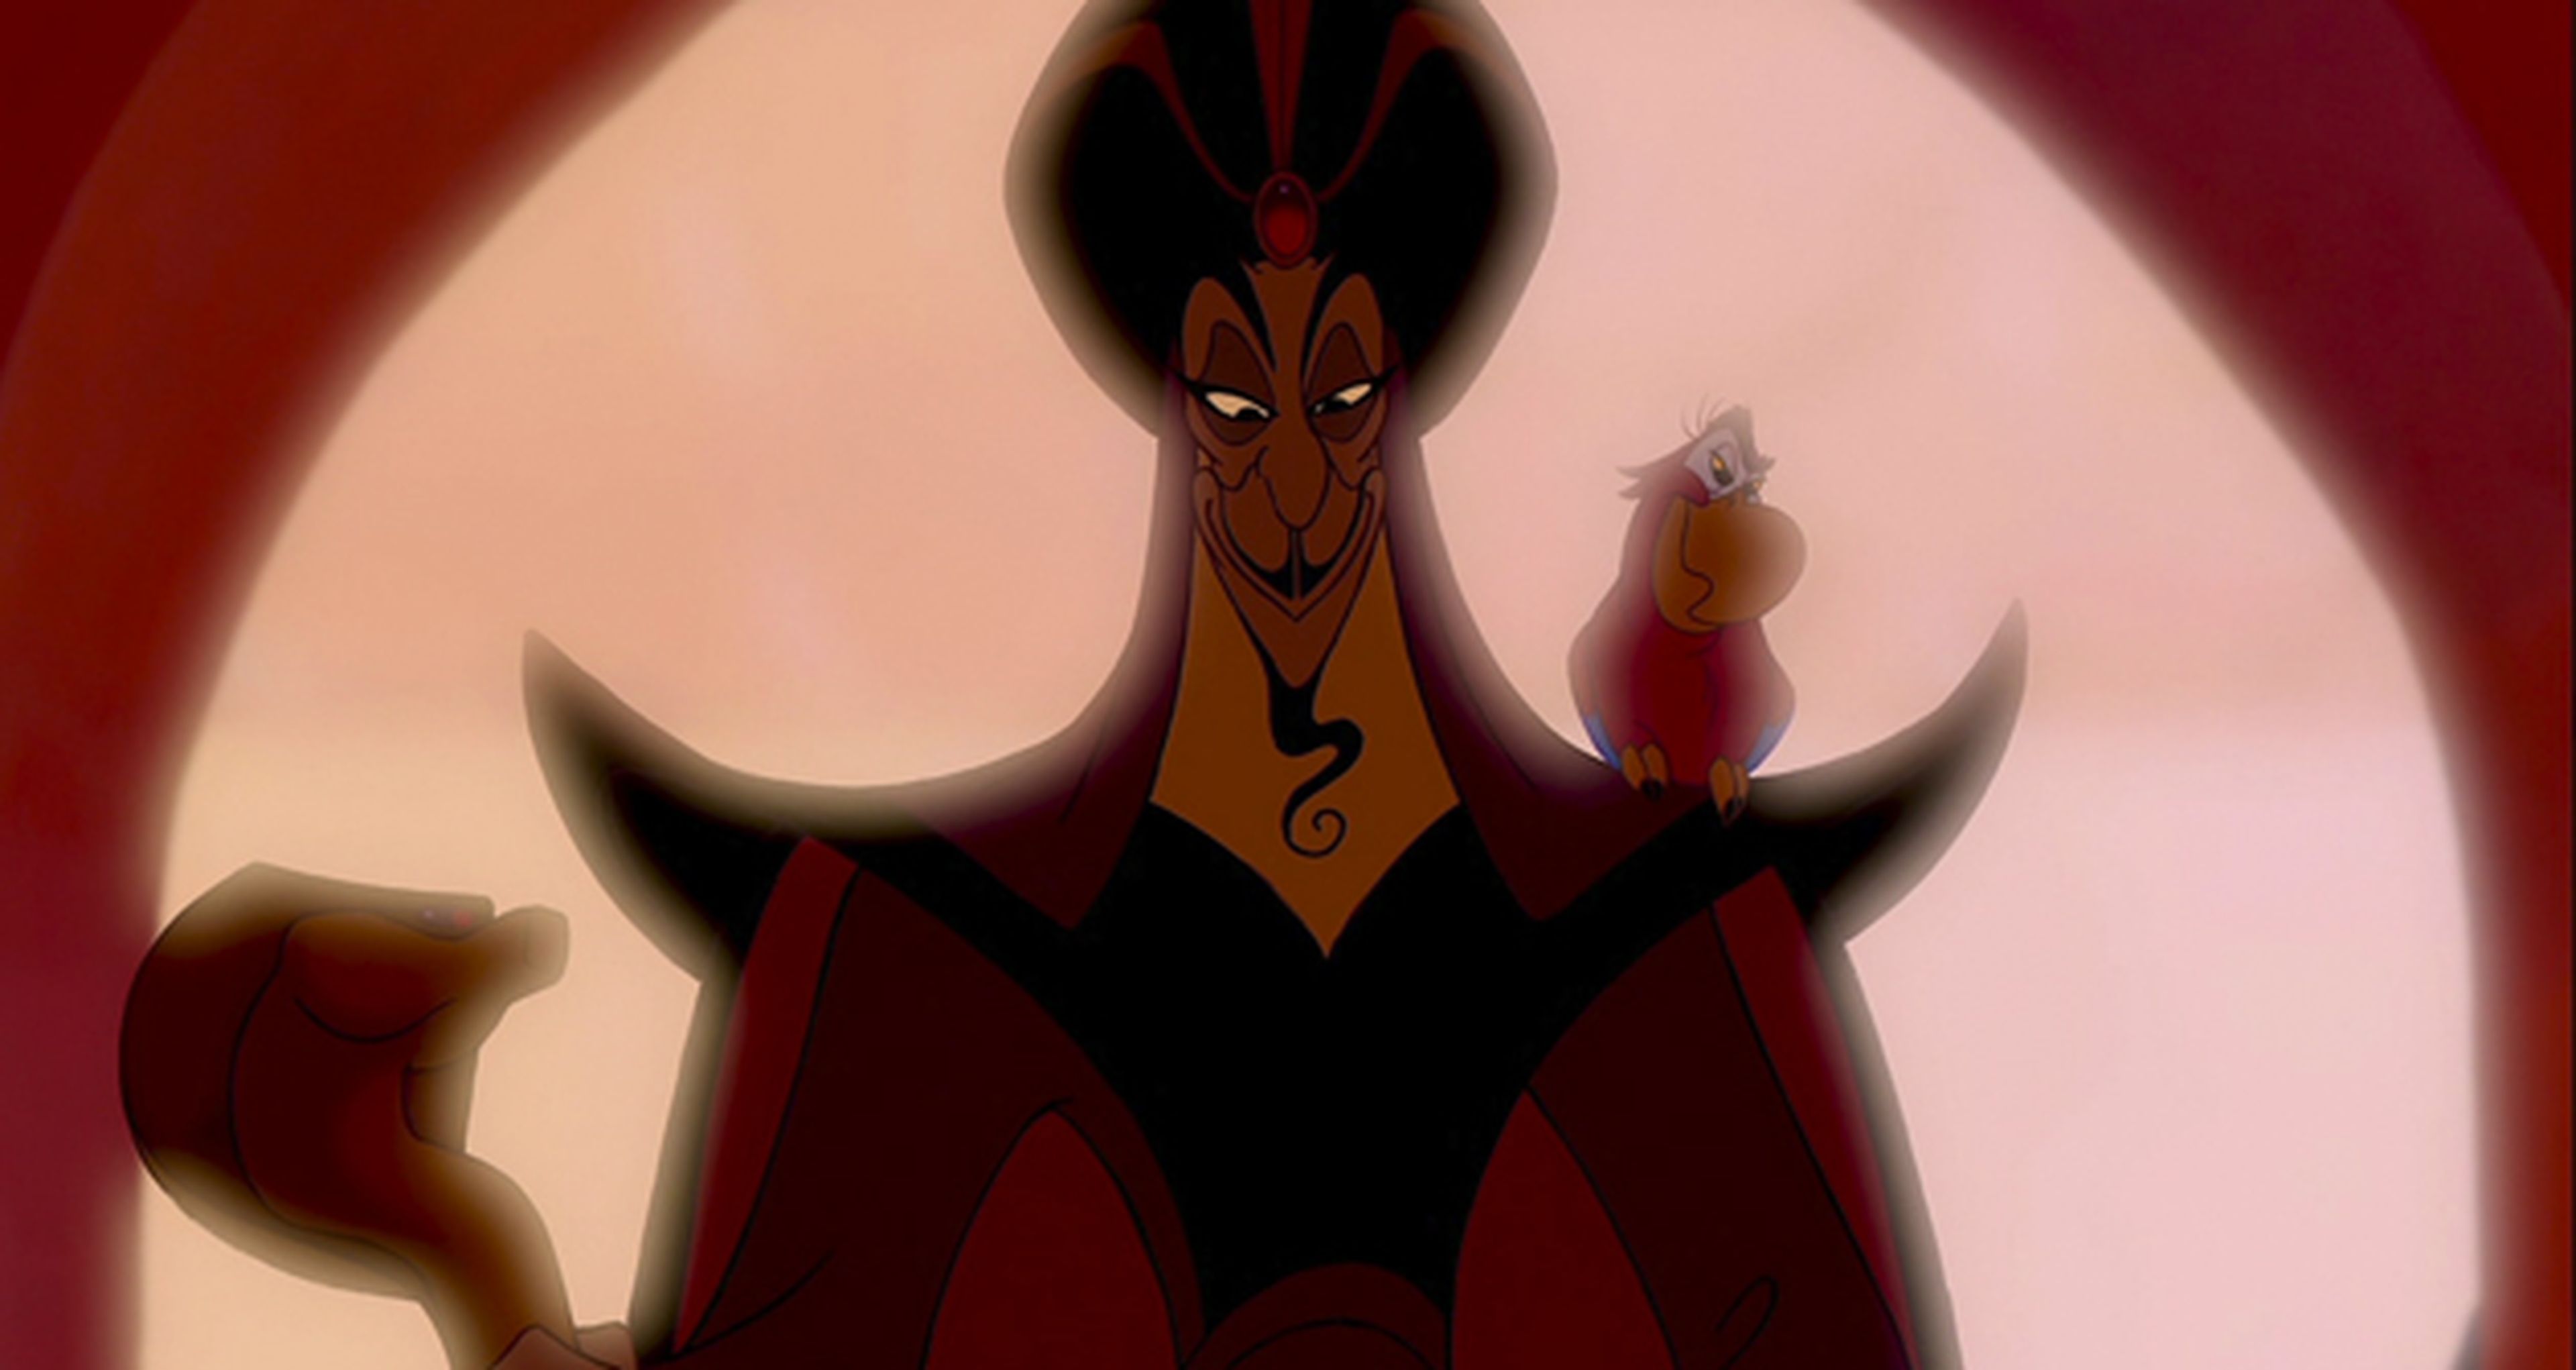 Crítica de Aladdin, un clásico de Disney que cumple 23 añitos